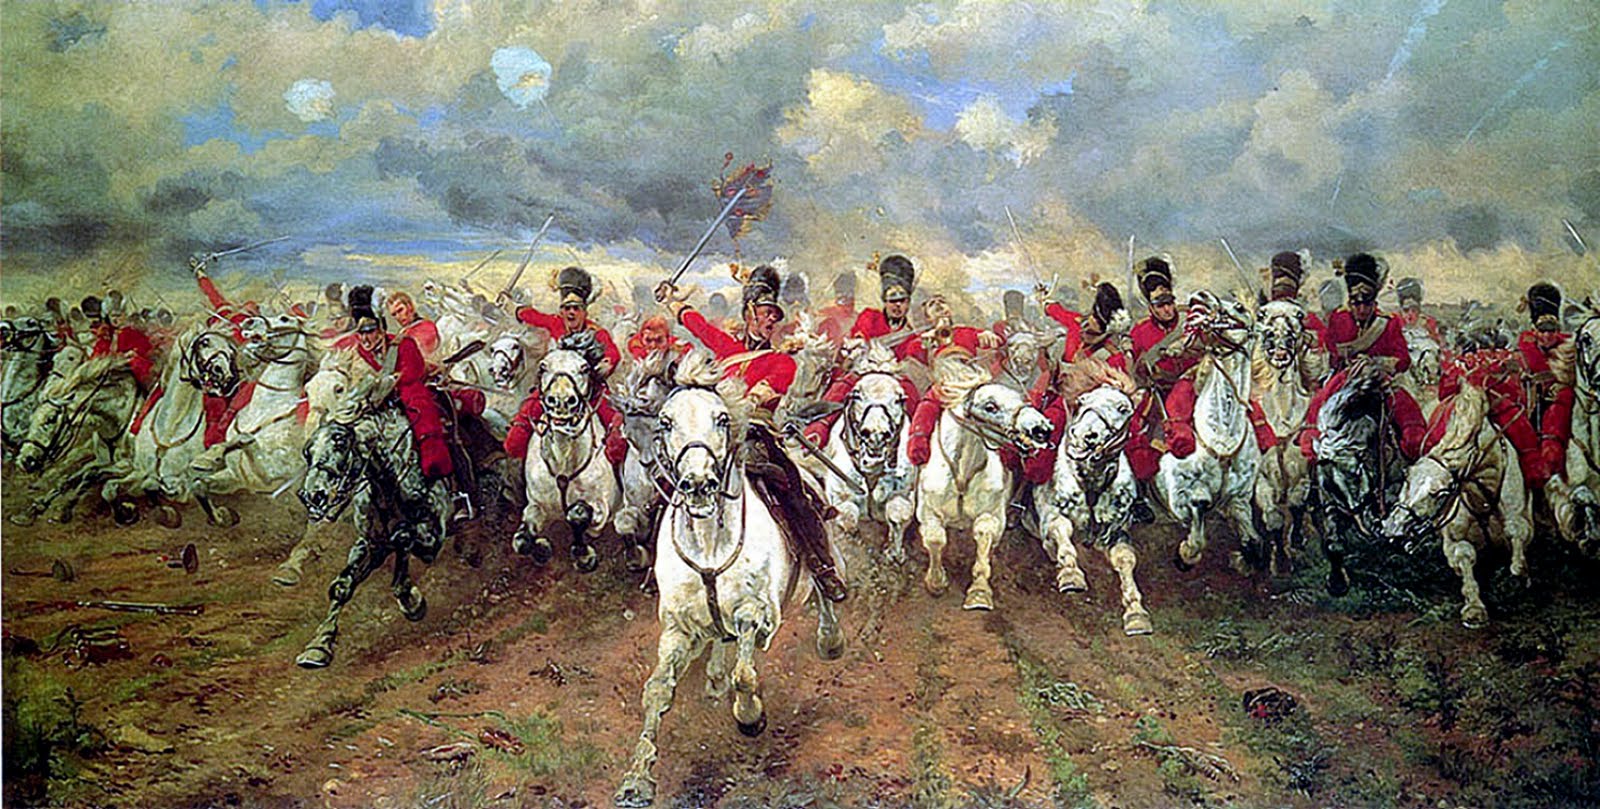 Waterloo, finally facing my Waterloo | The Bulletin